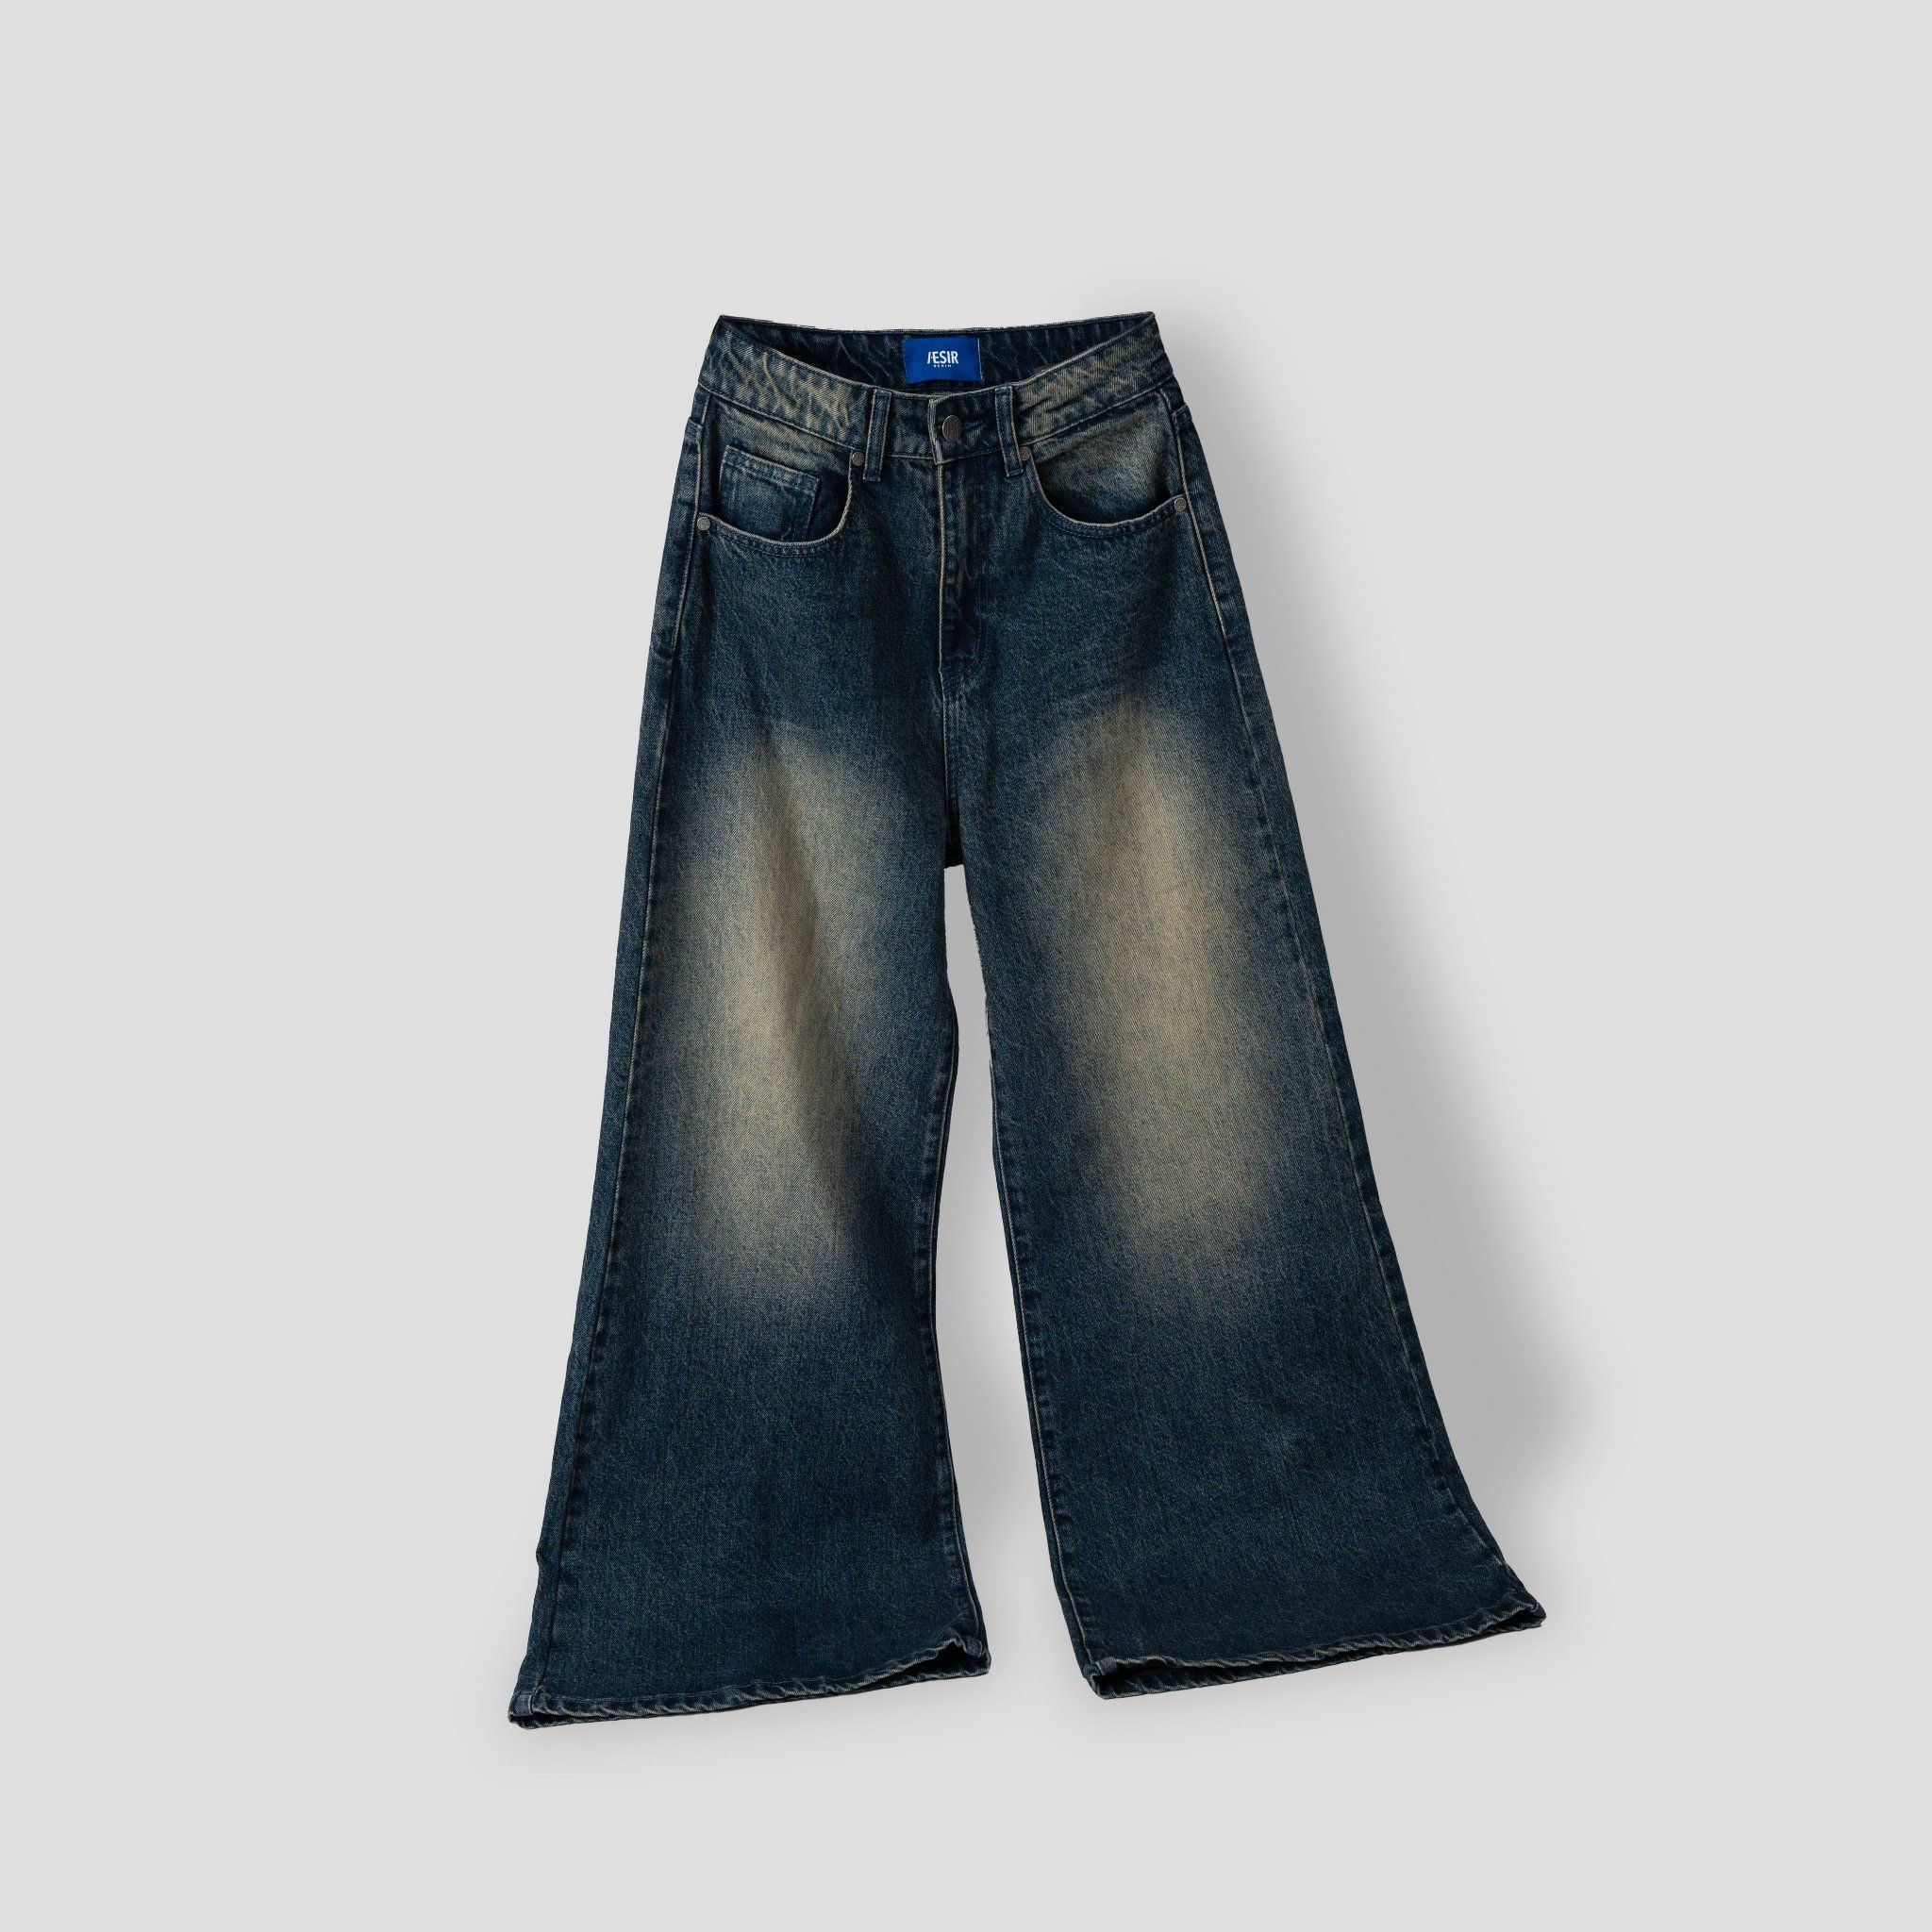  UNISEX - Garage Rock - Jeans (blue) 